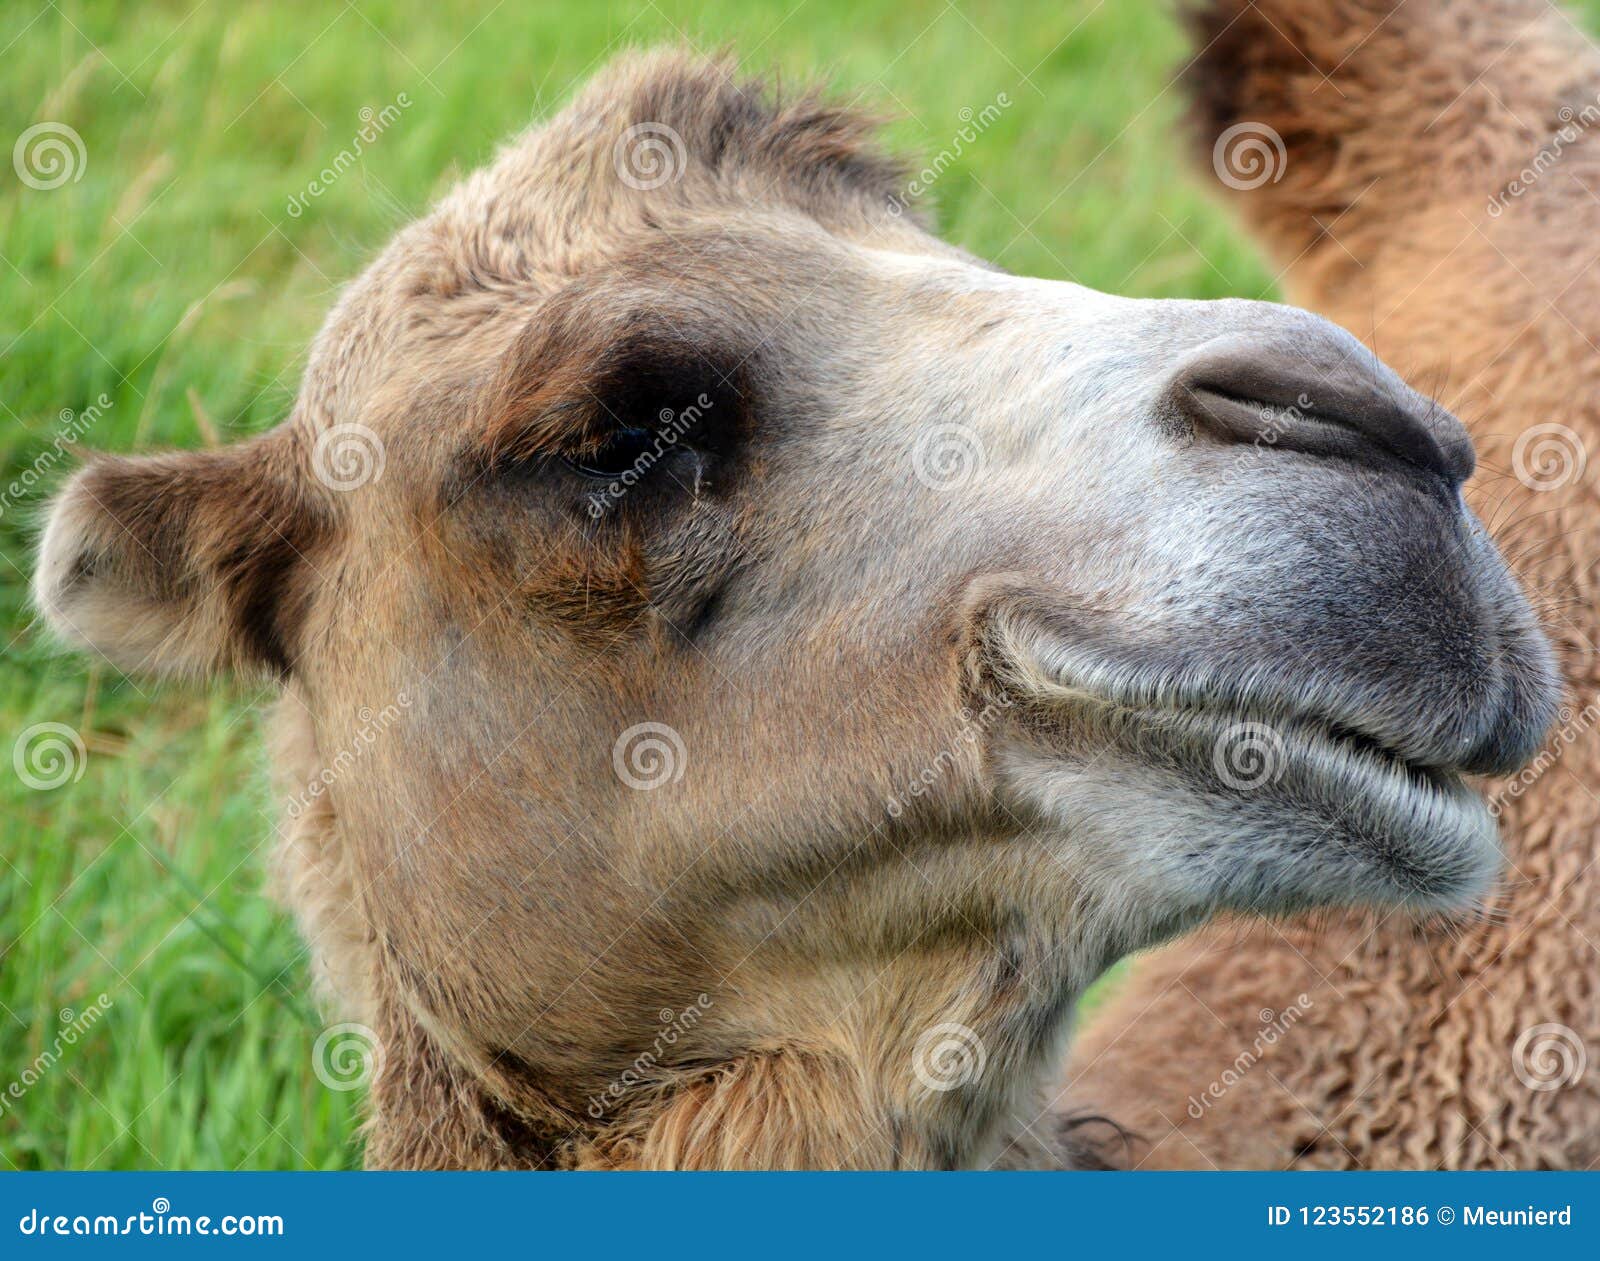 camel is an ungulate